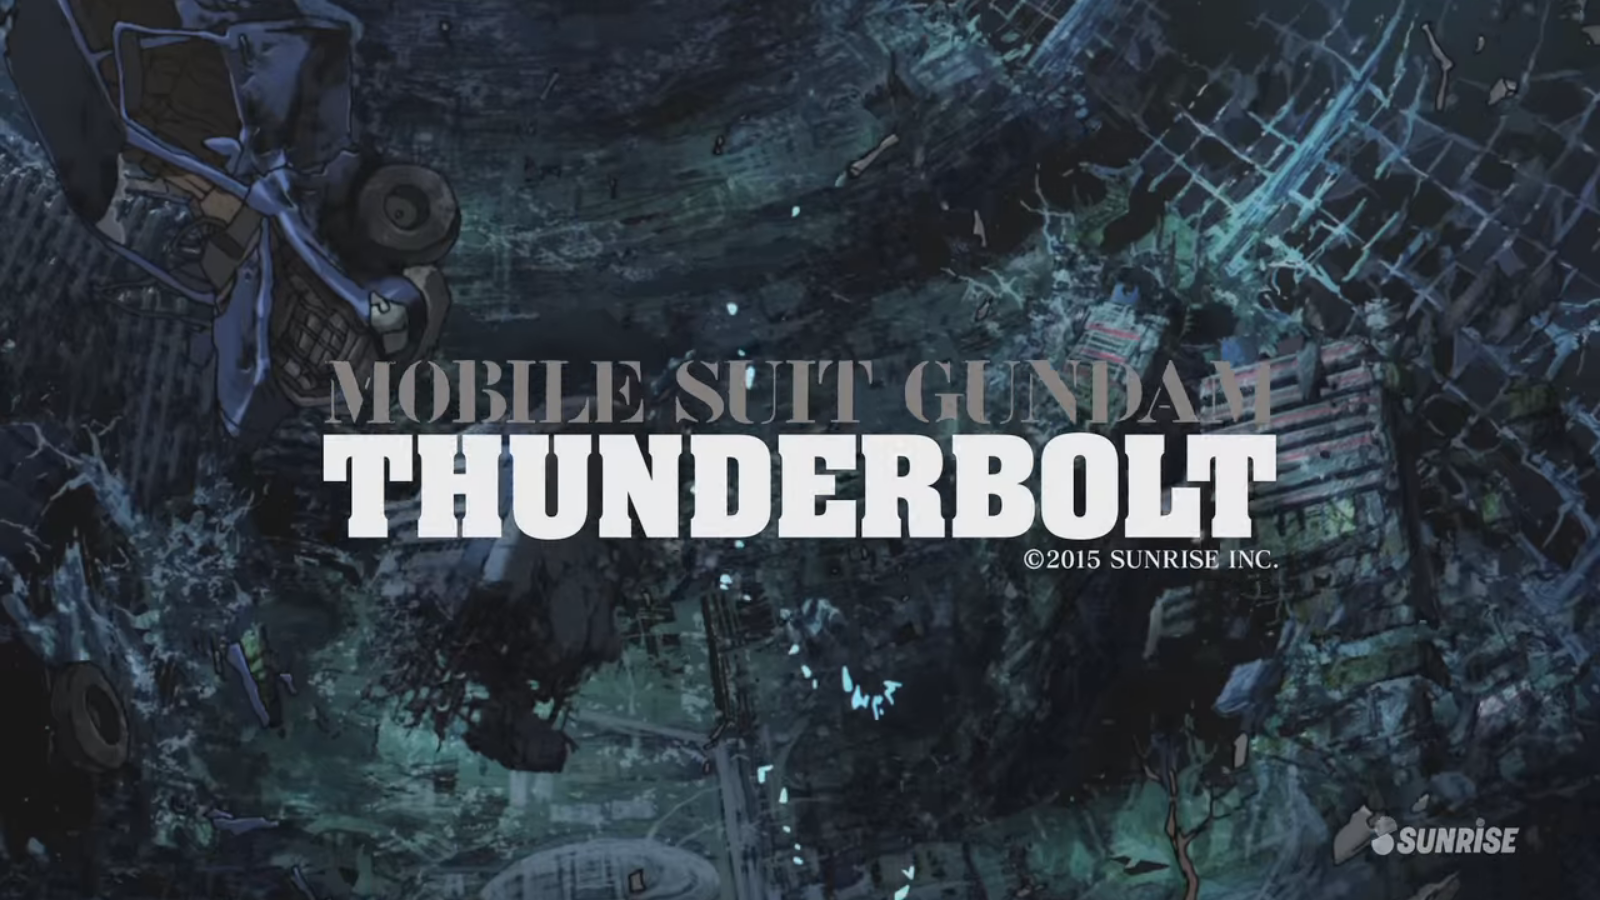 Art and Musings of a Miniature Hobbyist: Anime Review: Mobile Suit Gundam Thunderbolt (機動戦士ガンダム サンダーボルト Kidō Senshi Gandamu Sandāboruto)